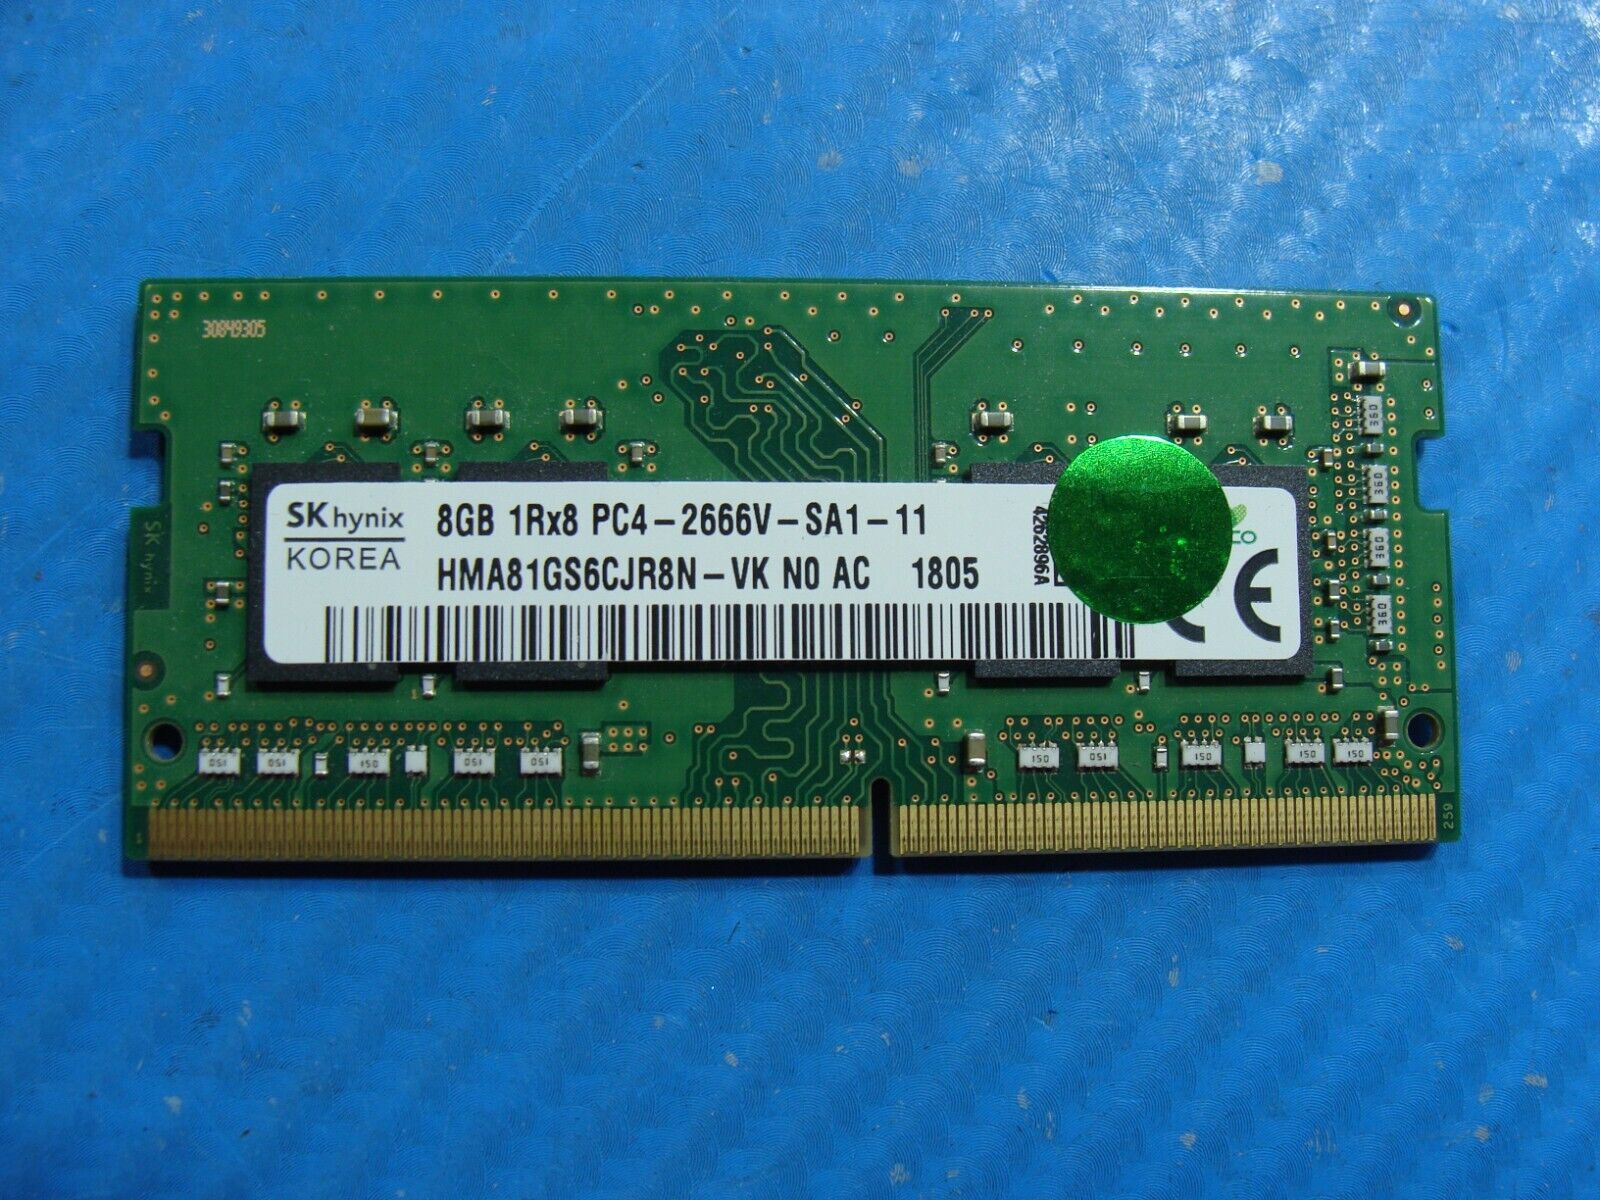 Dell G3 3579 SK Hynix 8GB 1Rx8 PC4-2666V Memory RAM SO-DIMM HMA81GS6CJR8N-VK